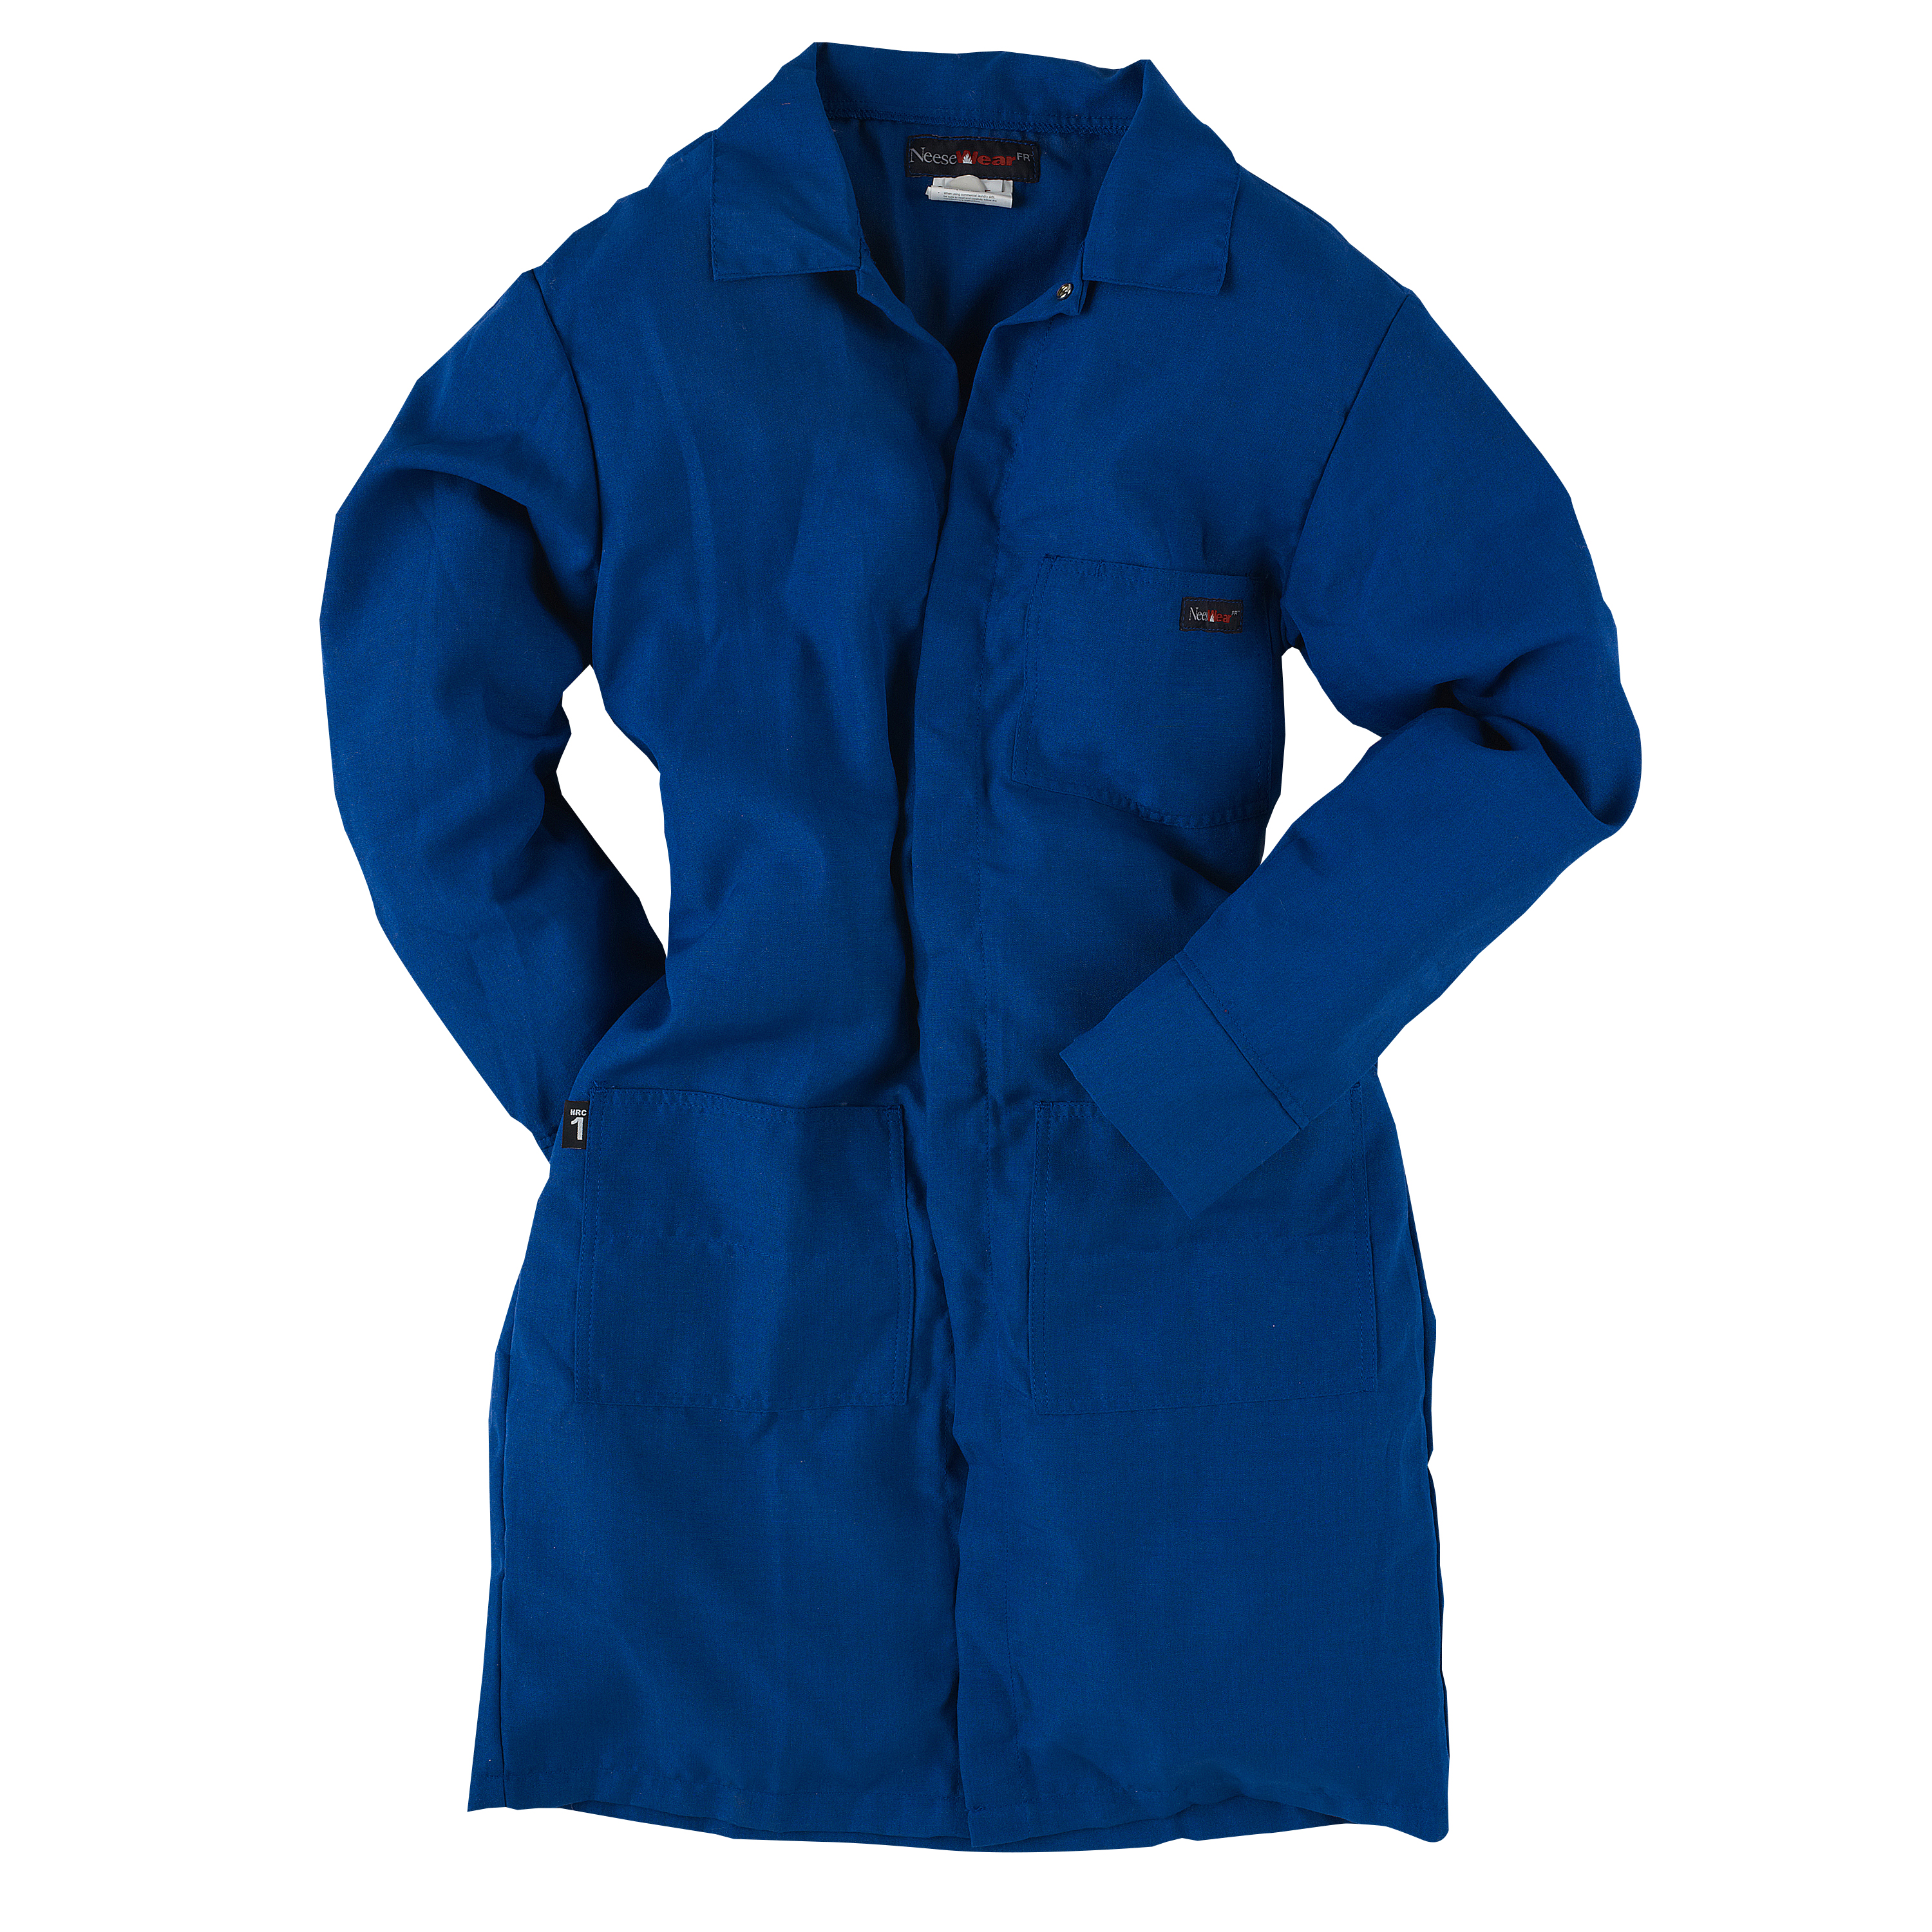 VN4LC 4.5 oz Nomex® FR Lab Coat (CAT 1) - Royal Blue - Size L